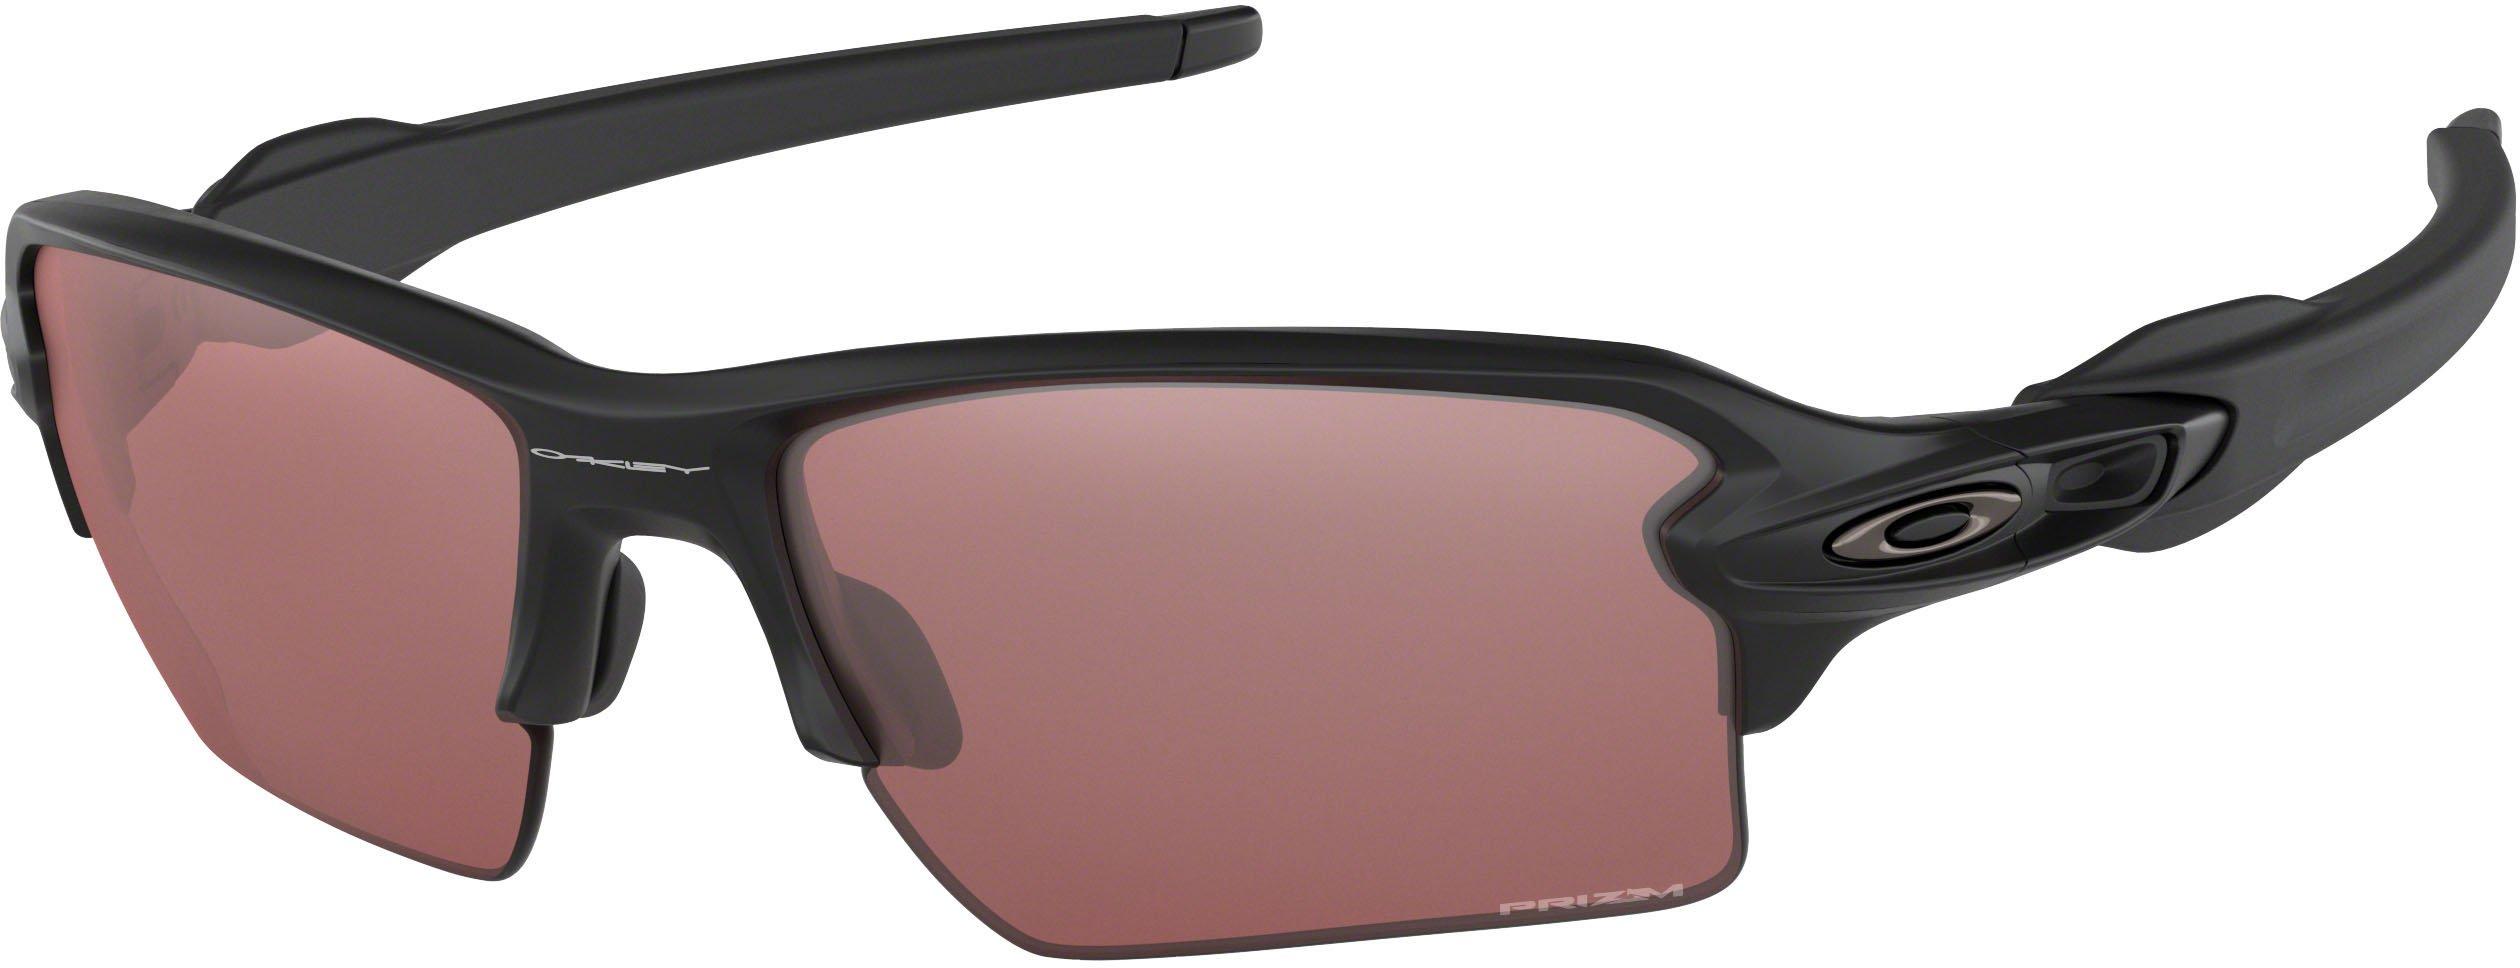 OAKLEY Flak 2.0 XL Sunglasses with Prizm Dark Golf